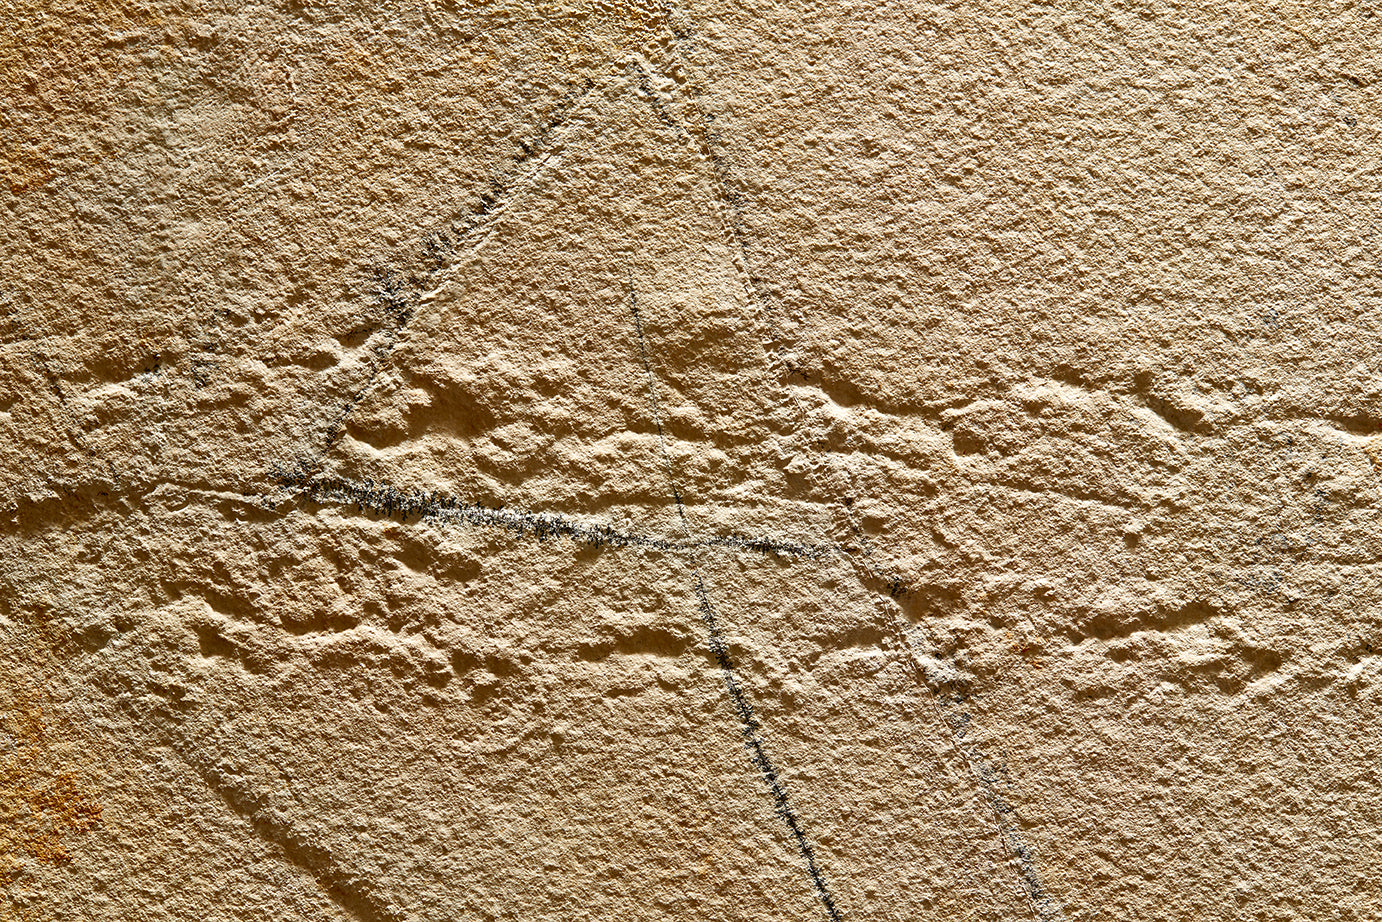 "A" grade | Horseshoe crab and tracks | Mesolimulus walchi | Museum quality